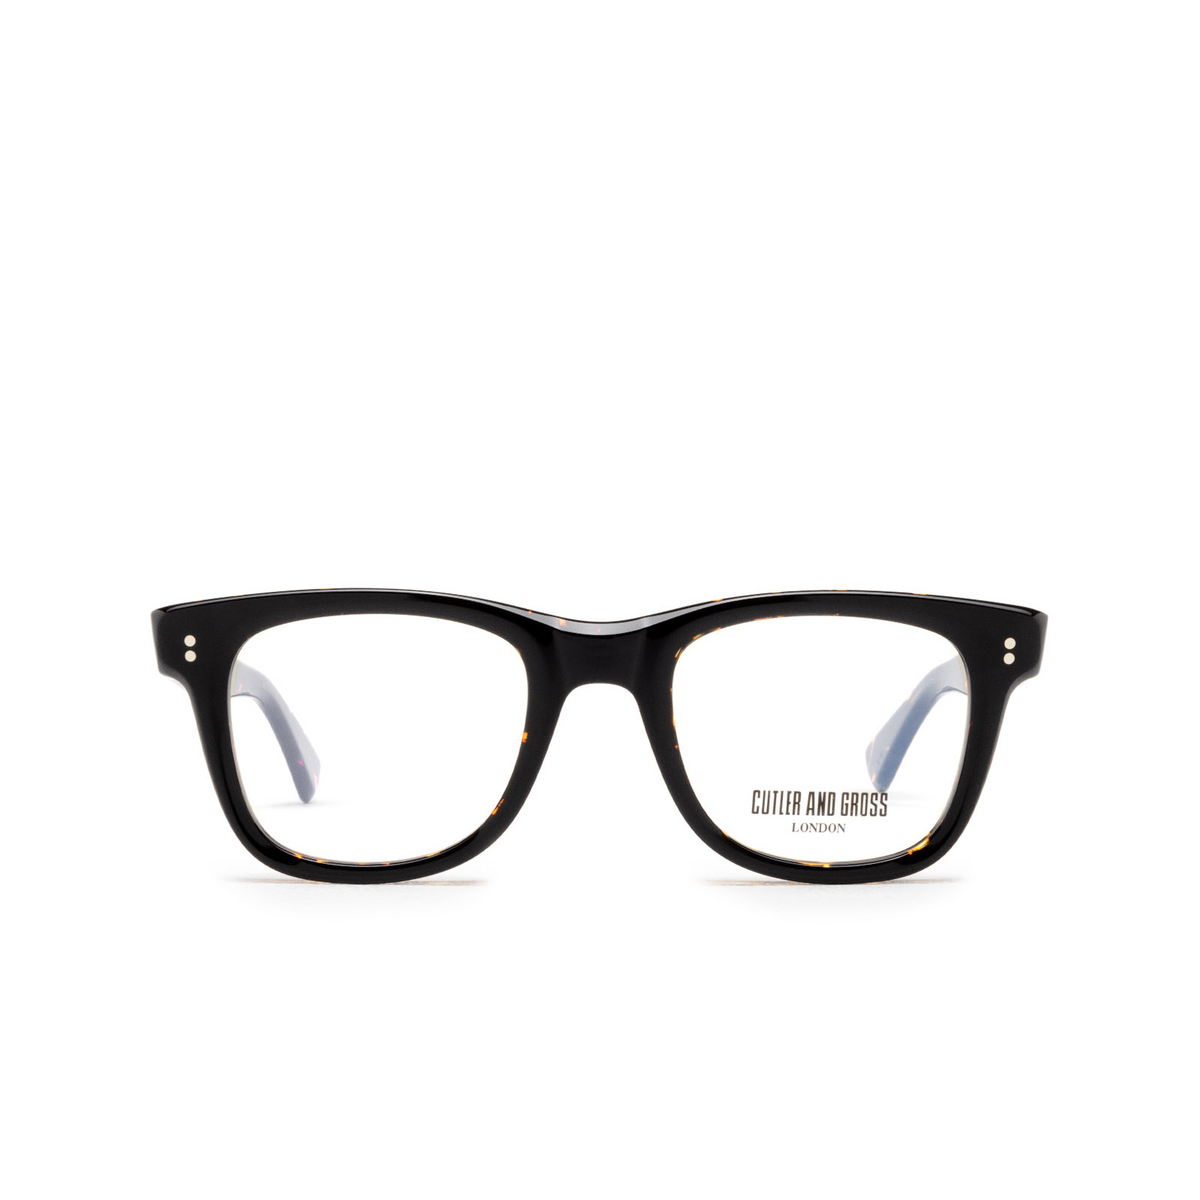 Cutler and Gross 9101 Eyeglasses 01 Black on Havana - front view